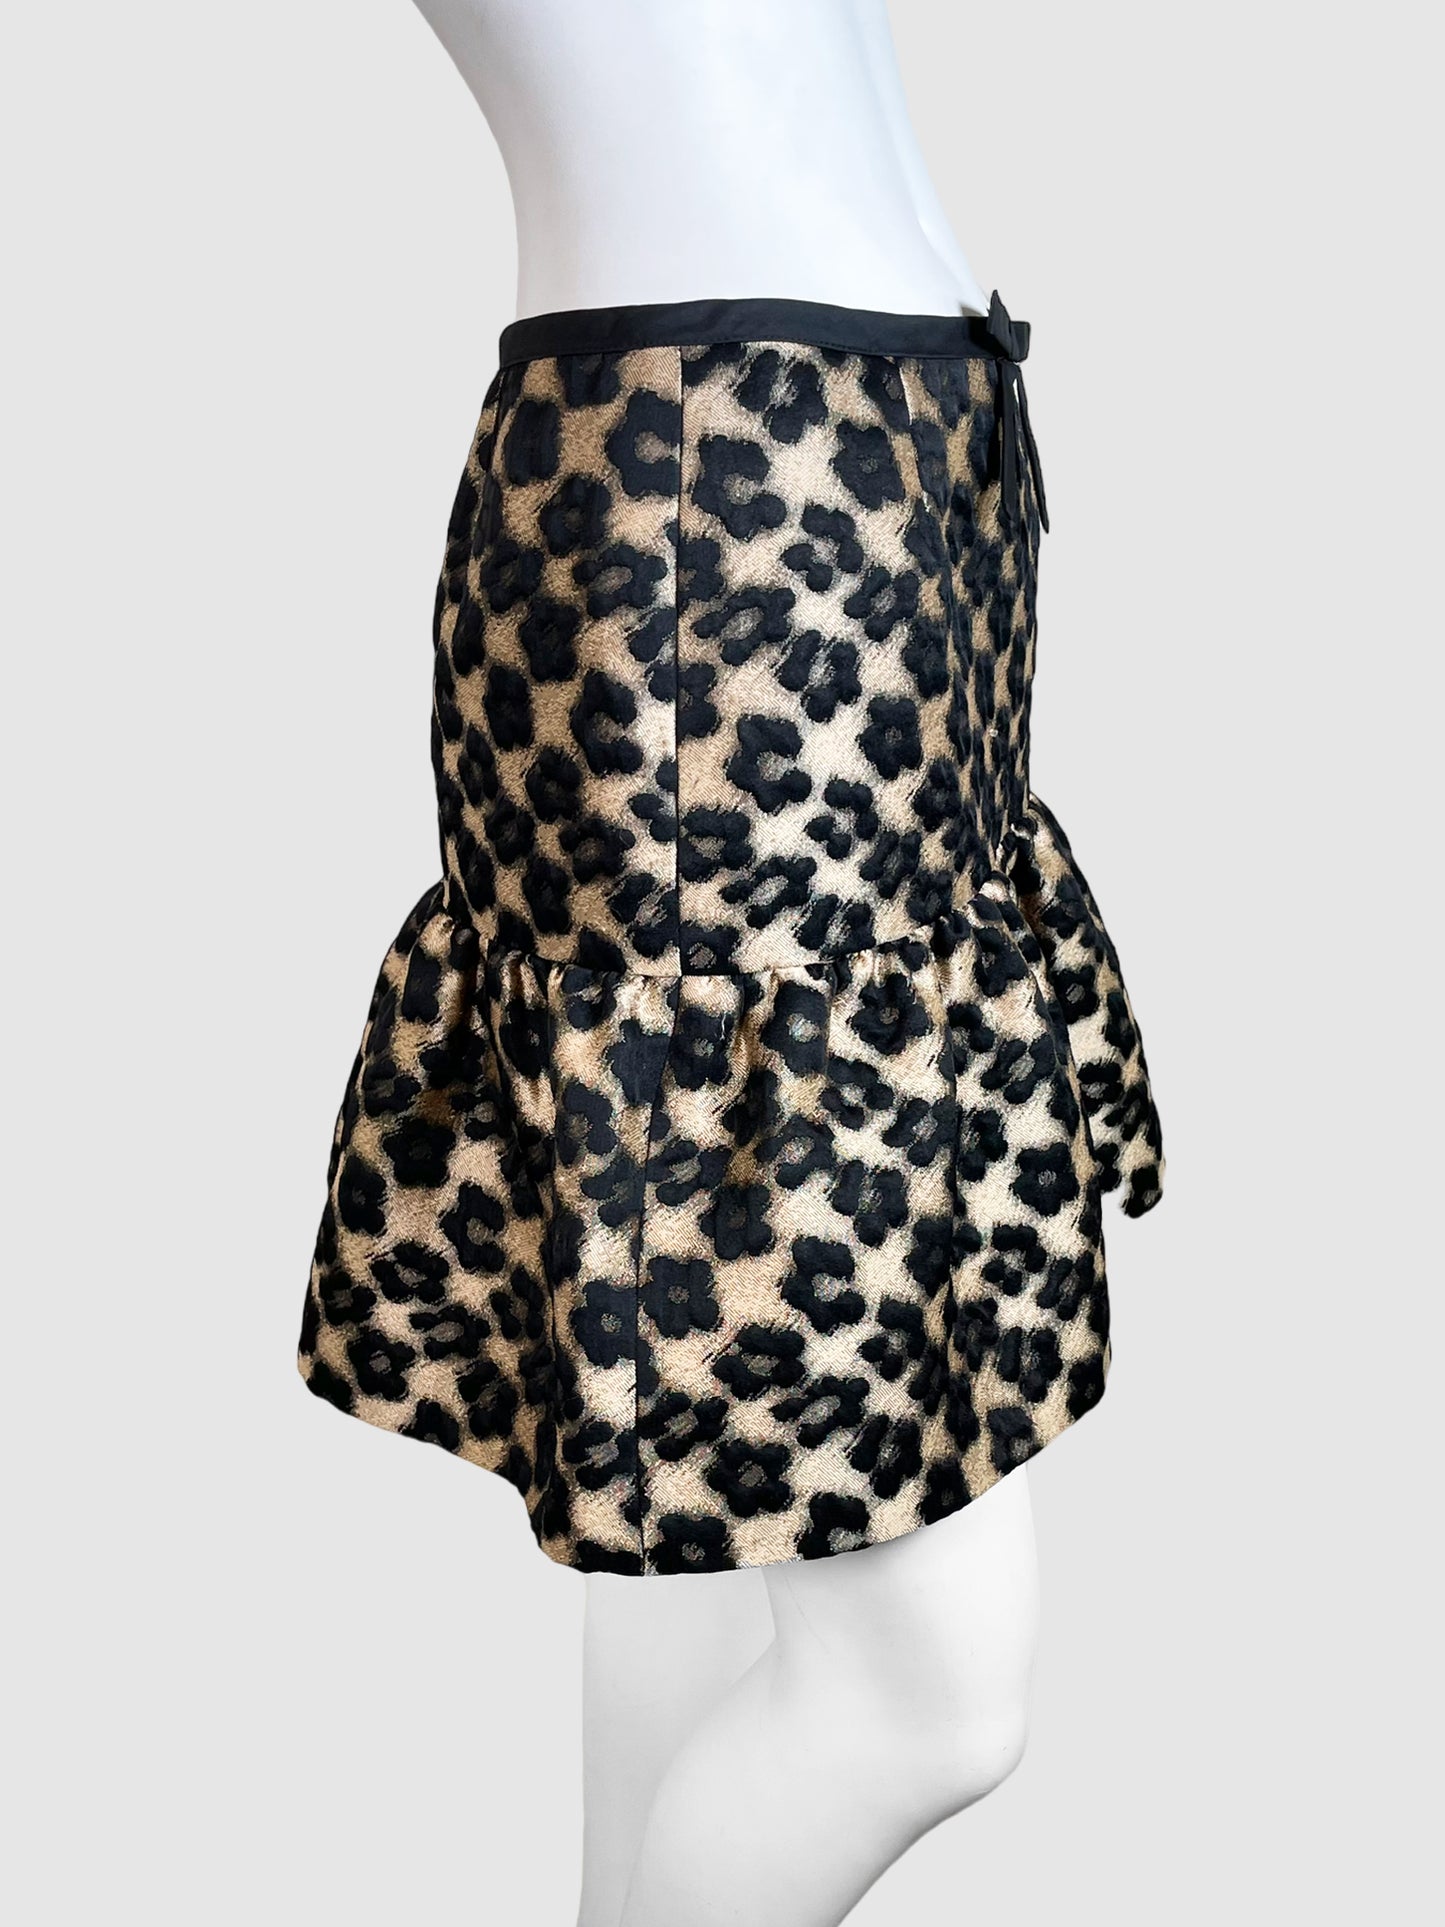 Valentino Floral Print Mini Skirt - Size 40